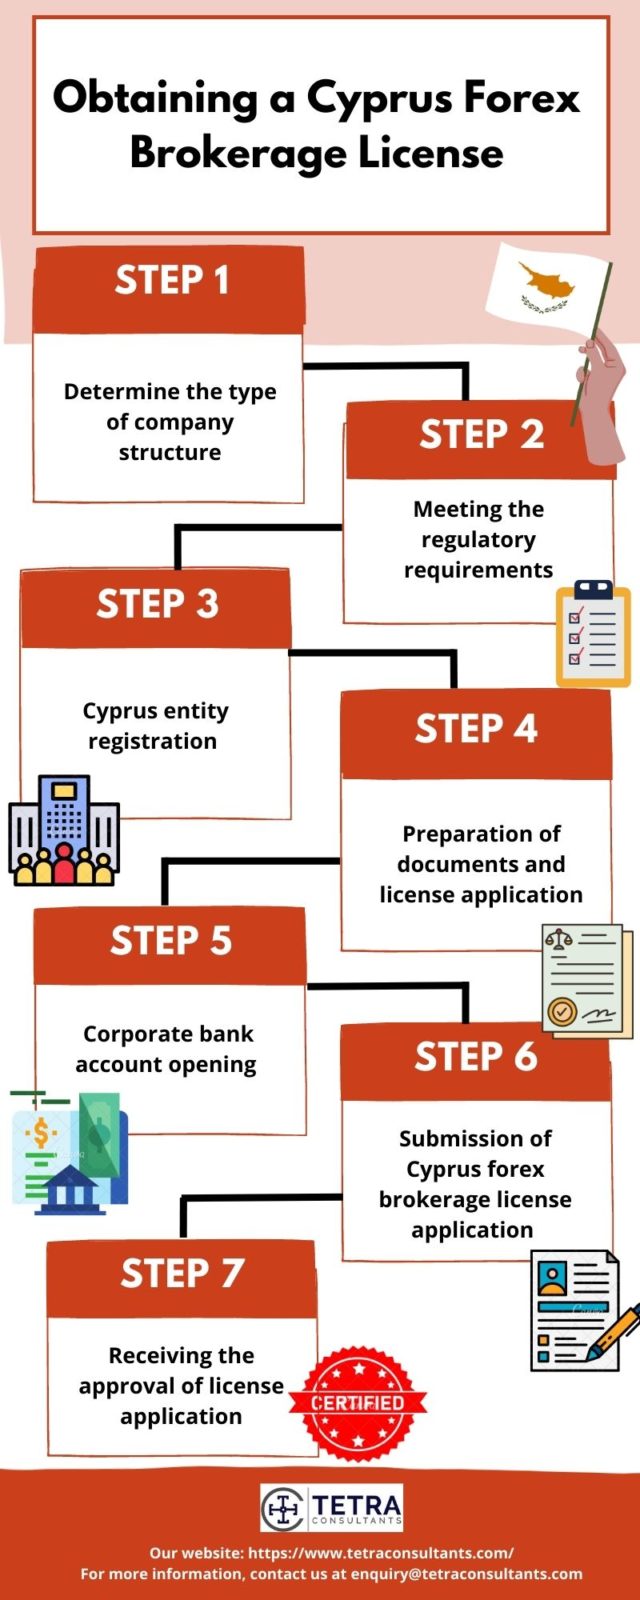 Cyprus Forex brokerage license